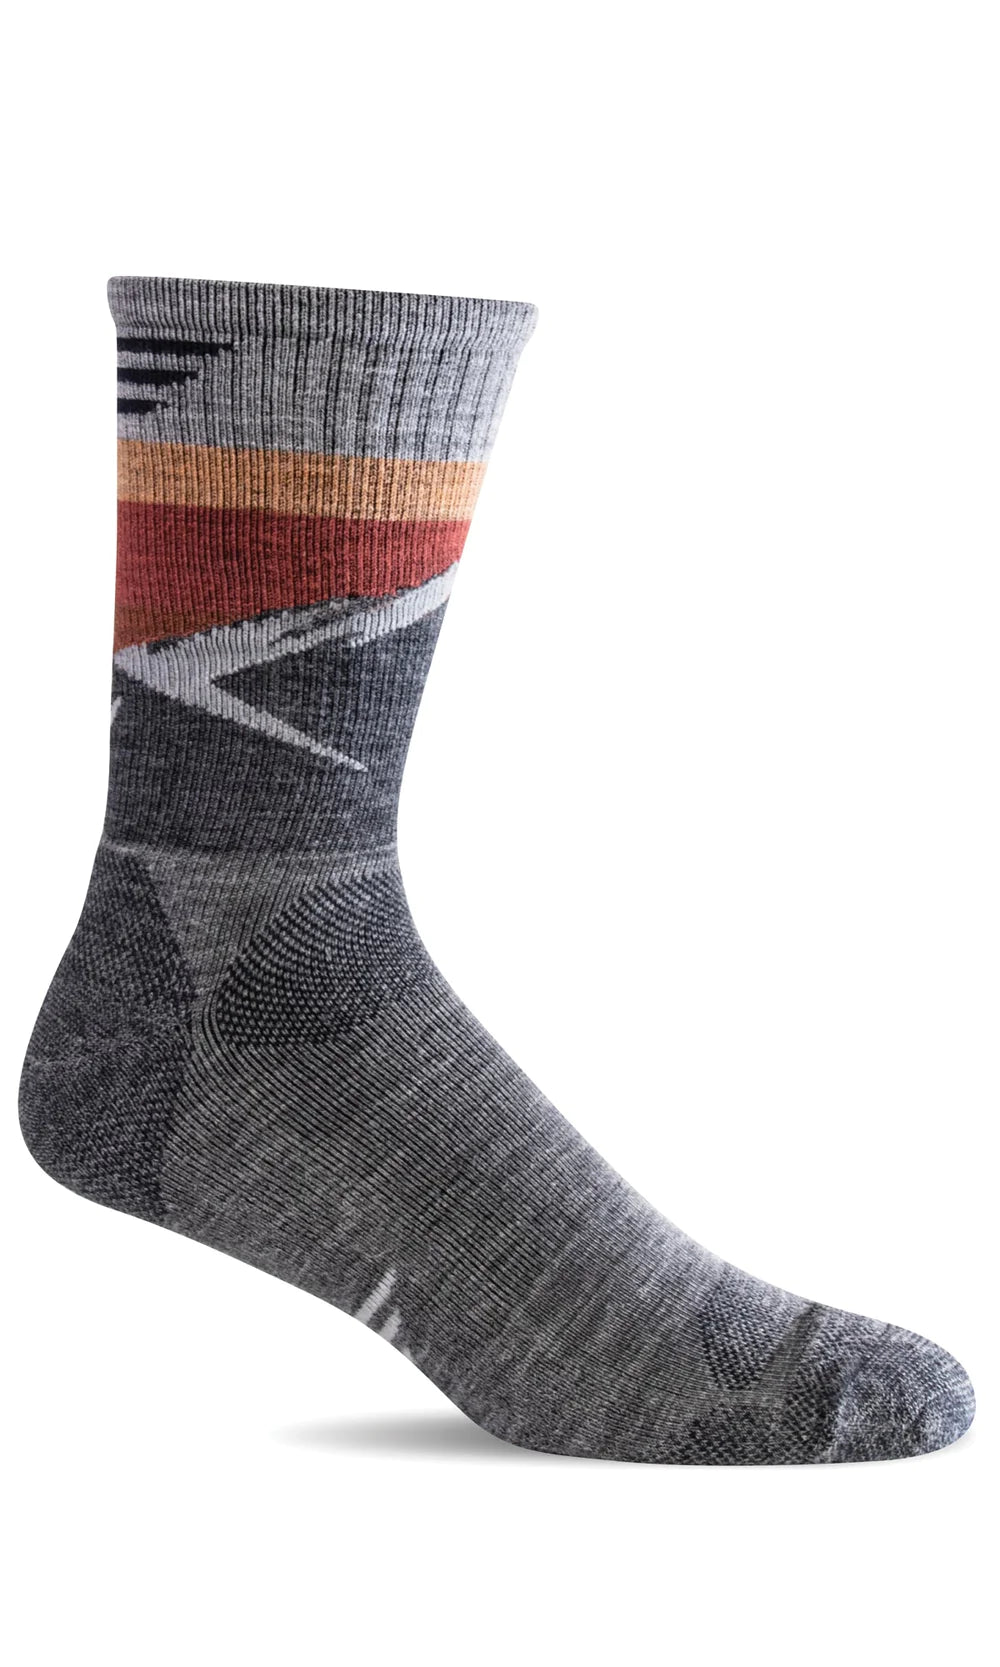 compression crew socks - The Sockery